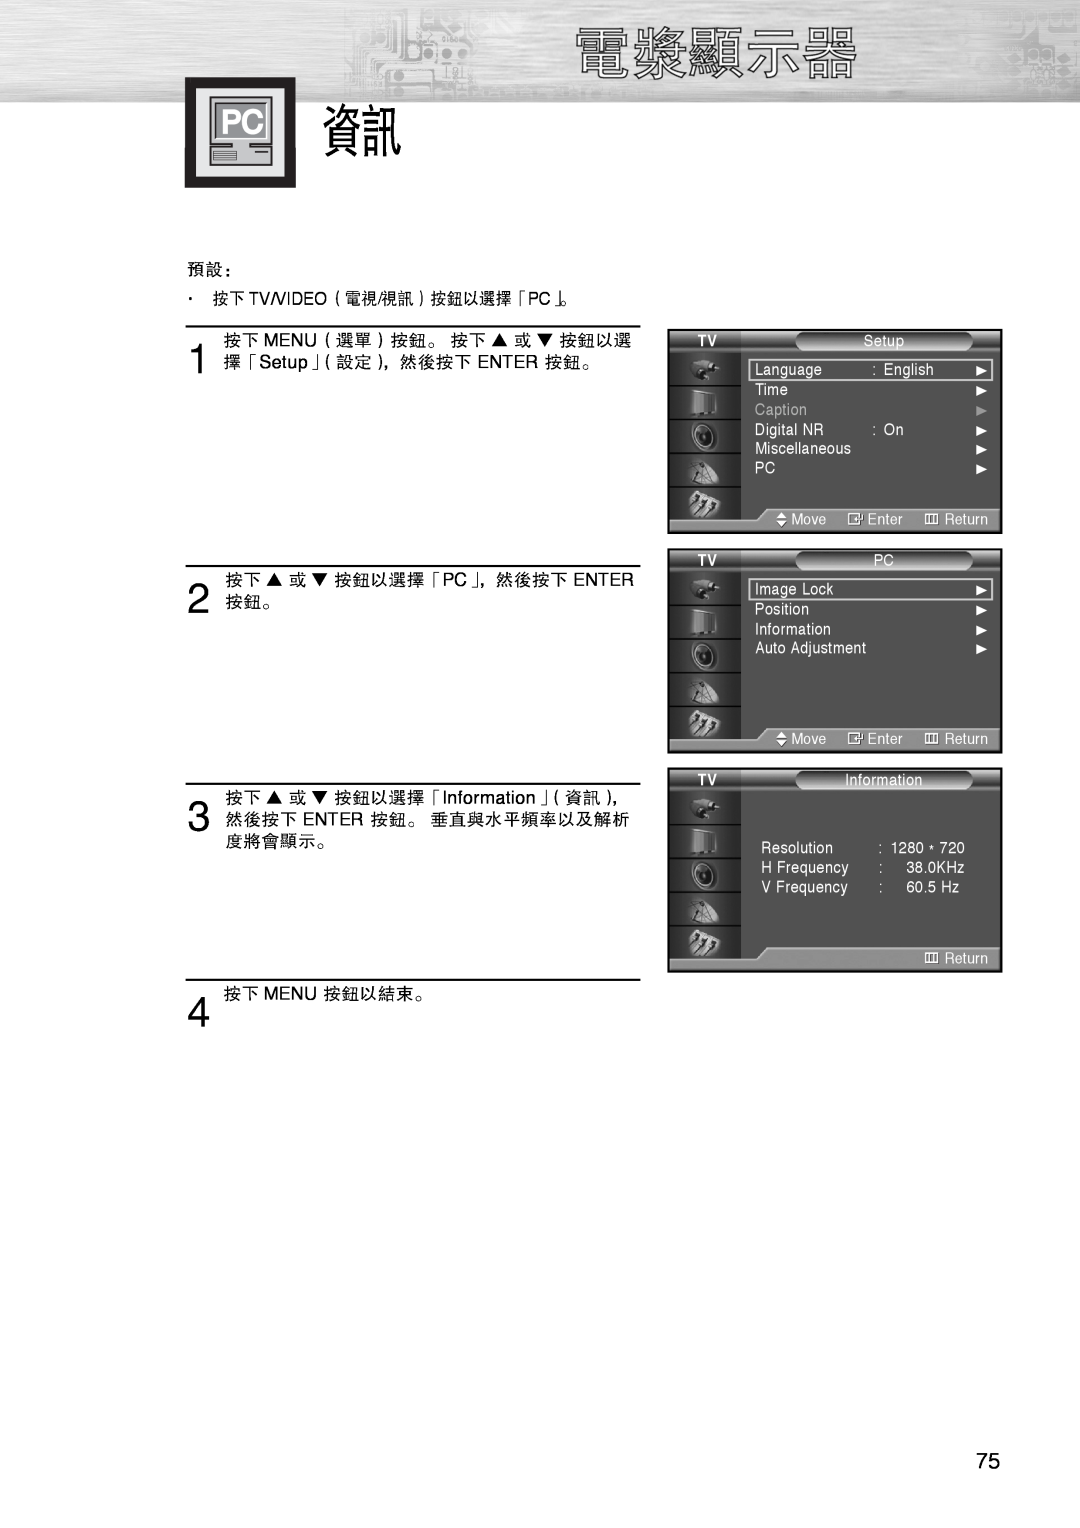 Samsung PL-42D4S manual Tv/Videopc, Menu, Setup ENTER PC ENTER Information ENTER MENU, Caption 